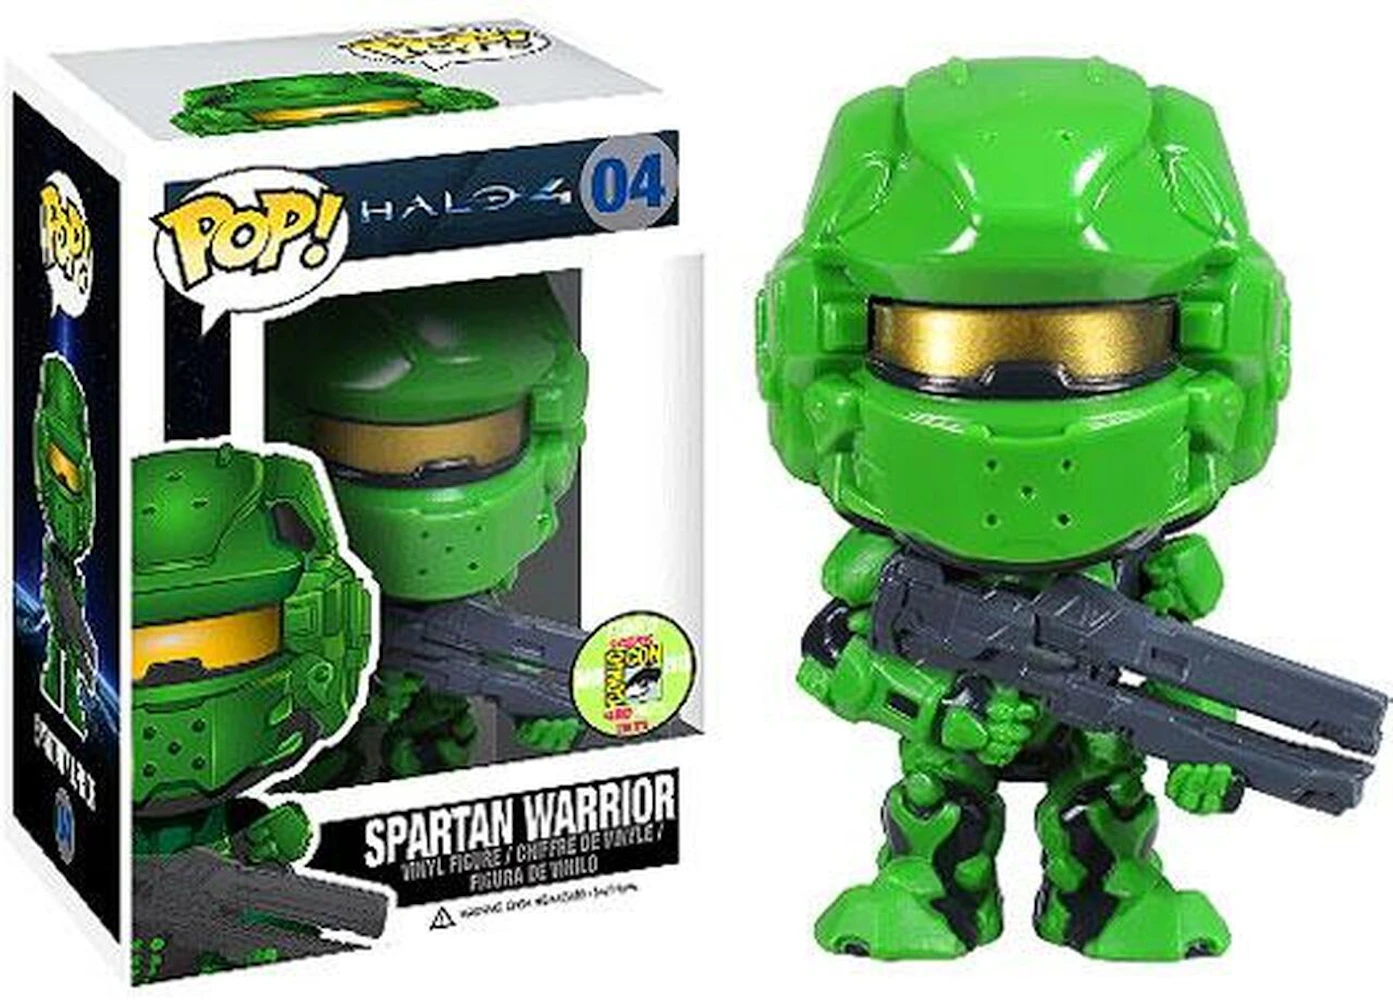 Funko Pop! Games Halo 4 Spartan Warrior (Green) SDCC Figure #04 - US